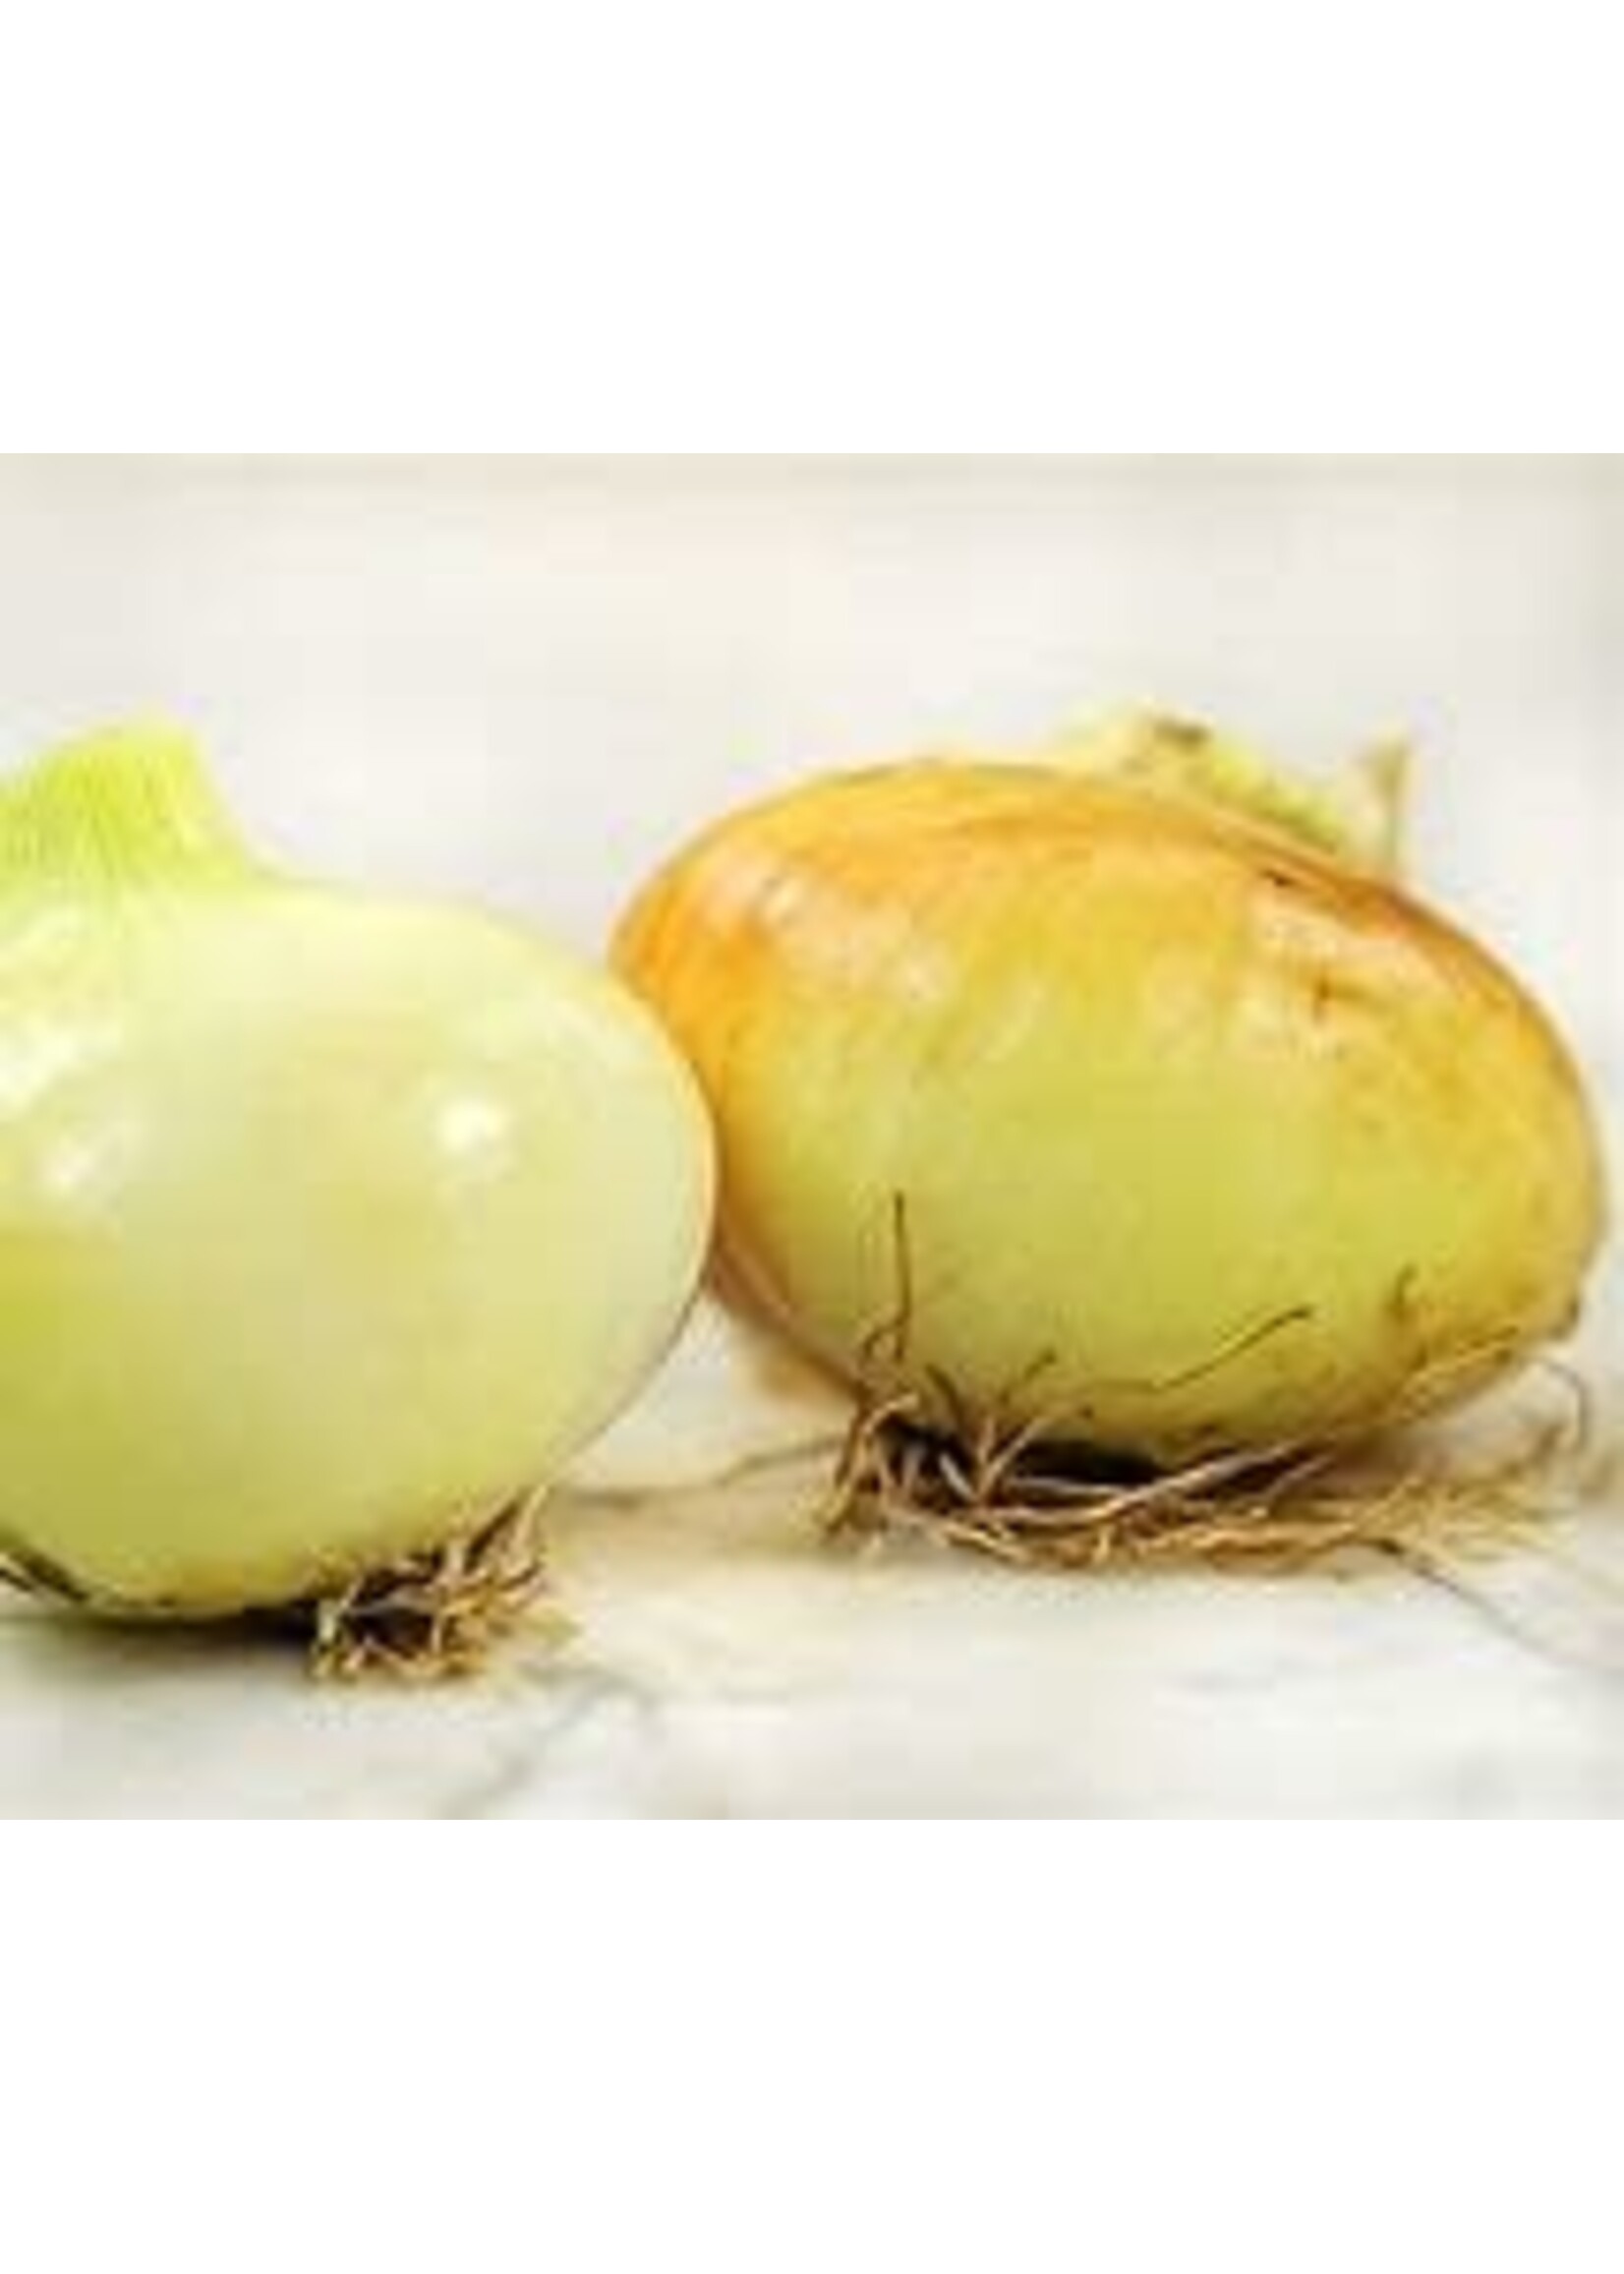 Onion Sturon Yellow Spanish